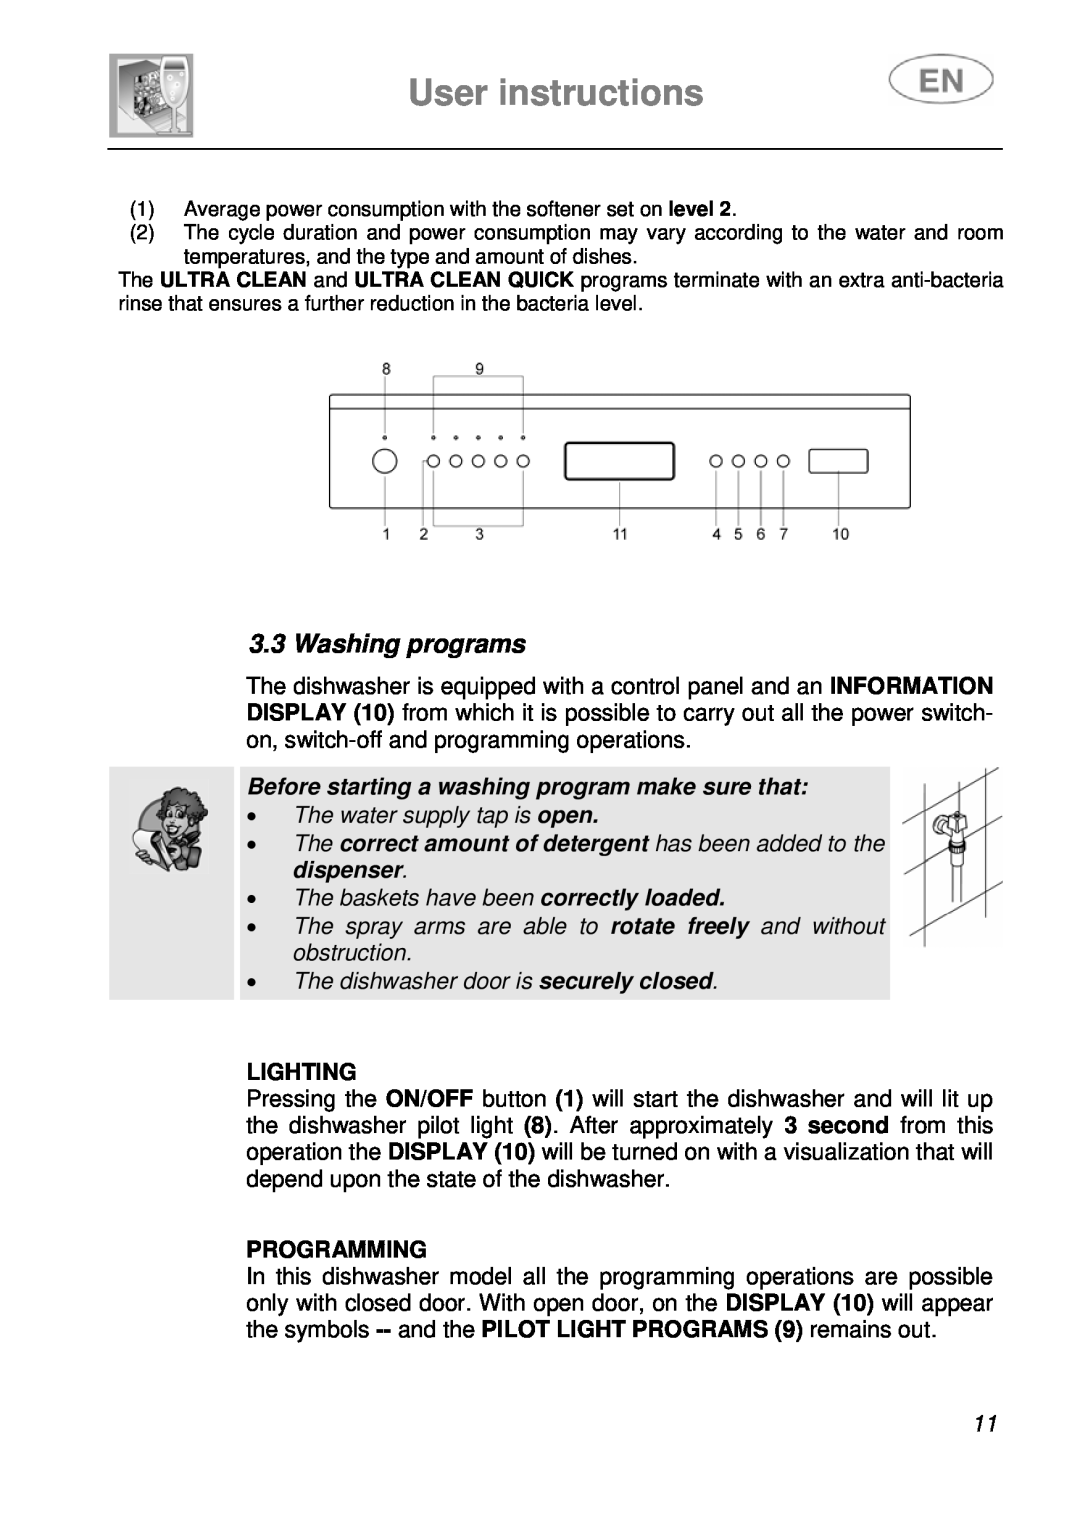 Smeg LSA643XPQ User instructions, Washing programs, Before starting a washing program make sure that, Lighting 